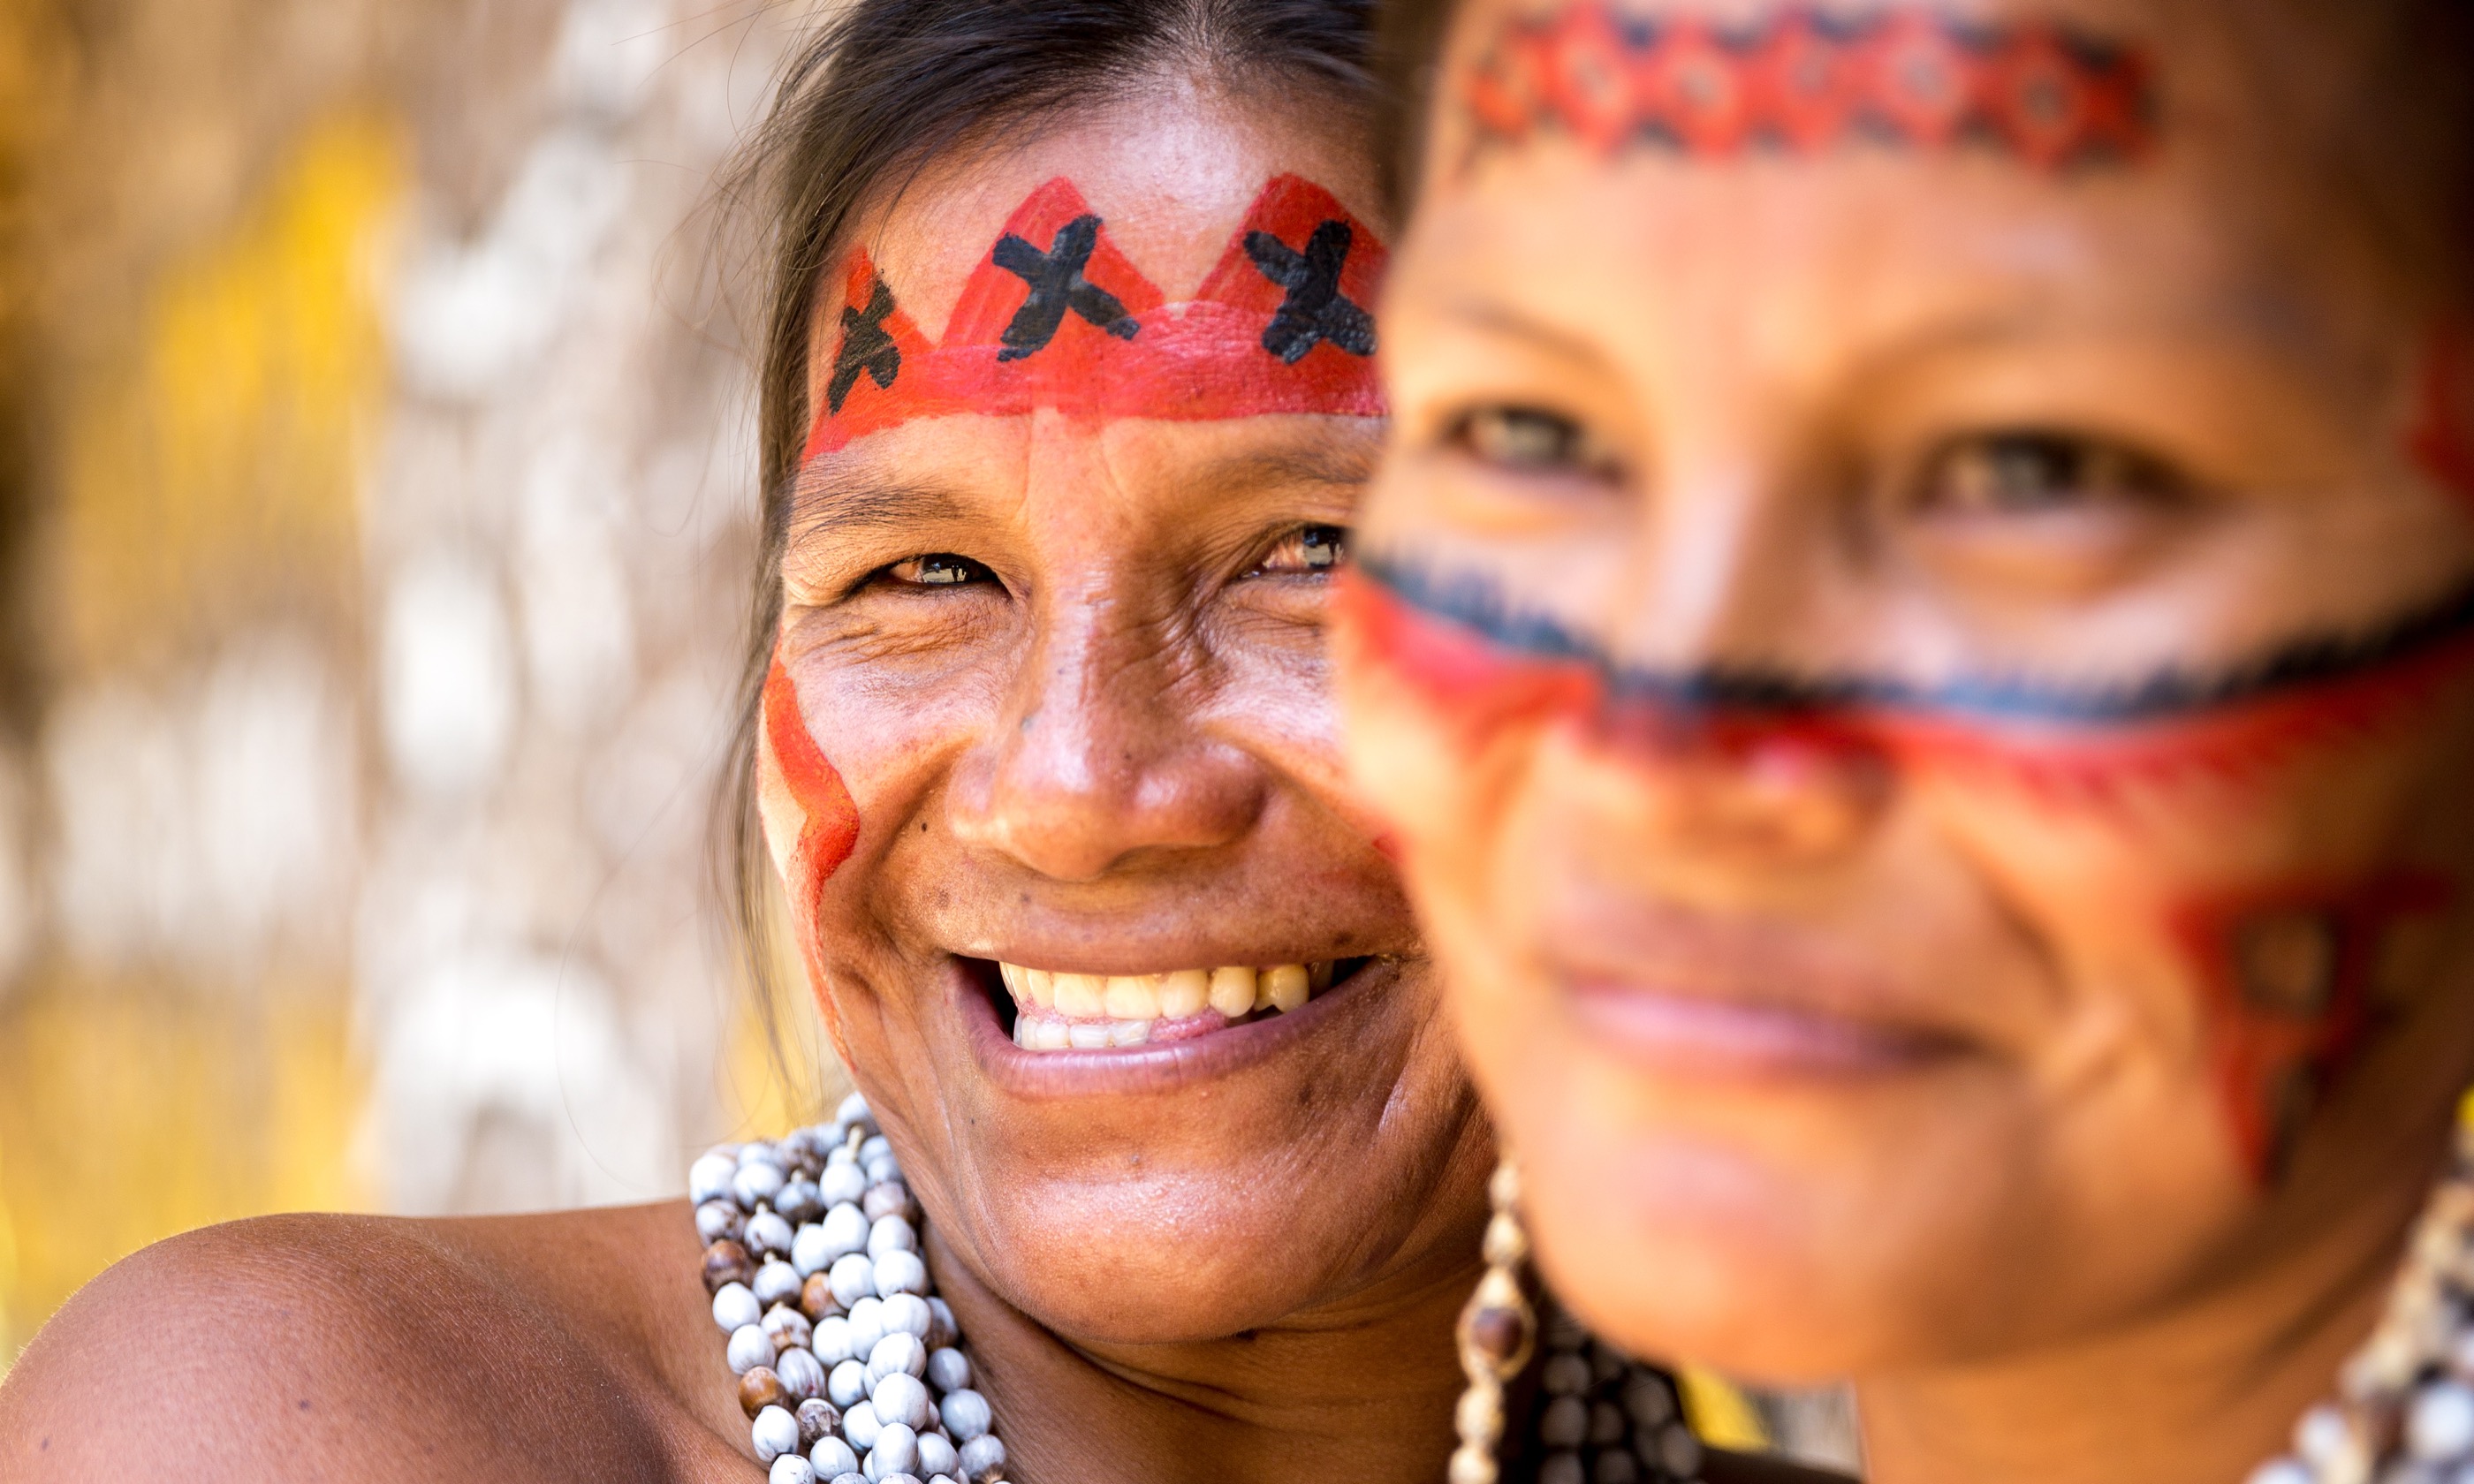 Indigenous tribe, Brazil (Shutterstock.com)